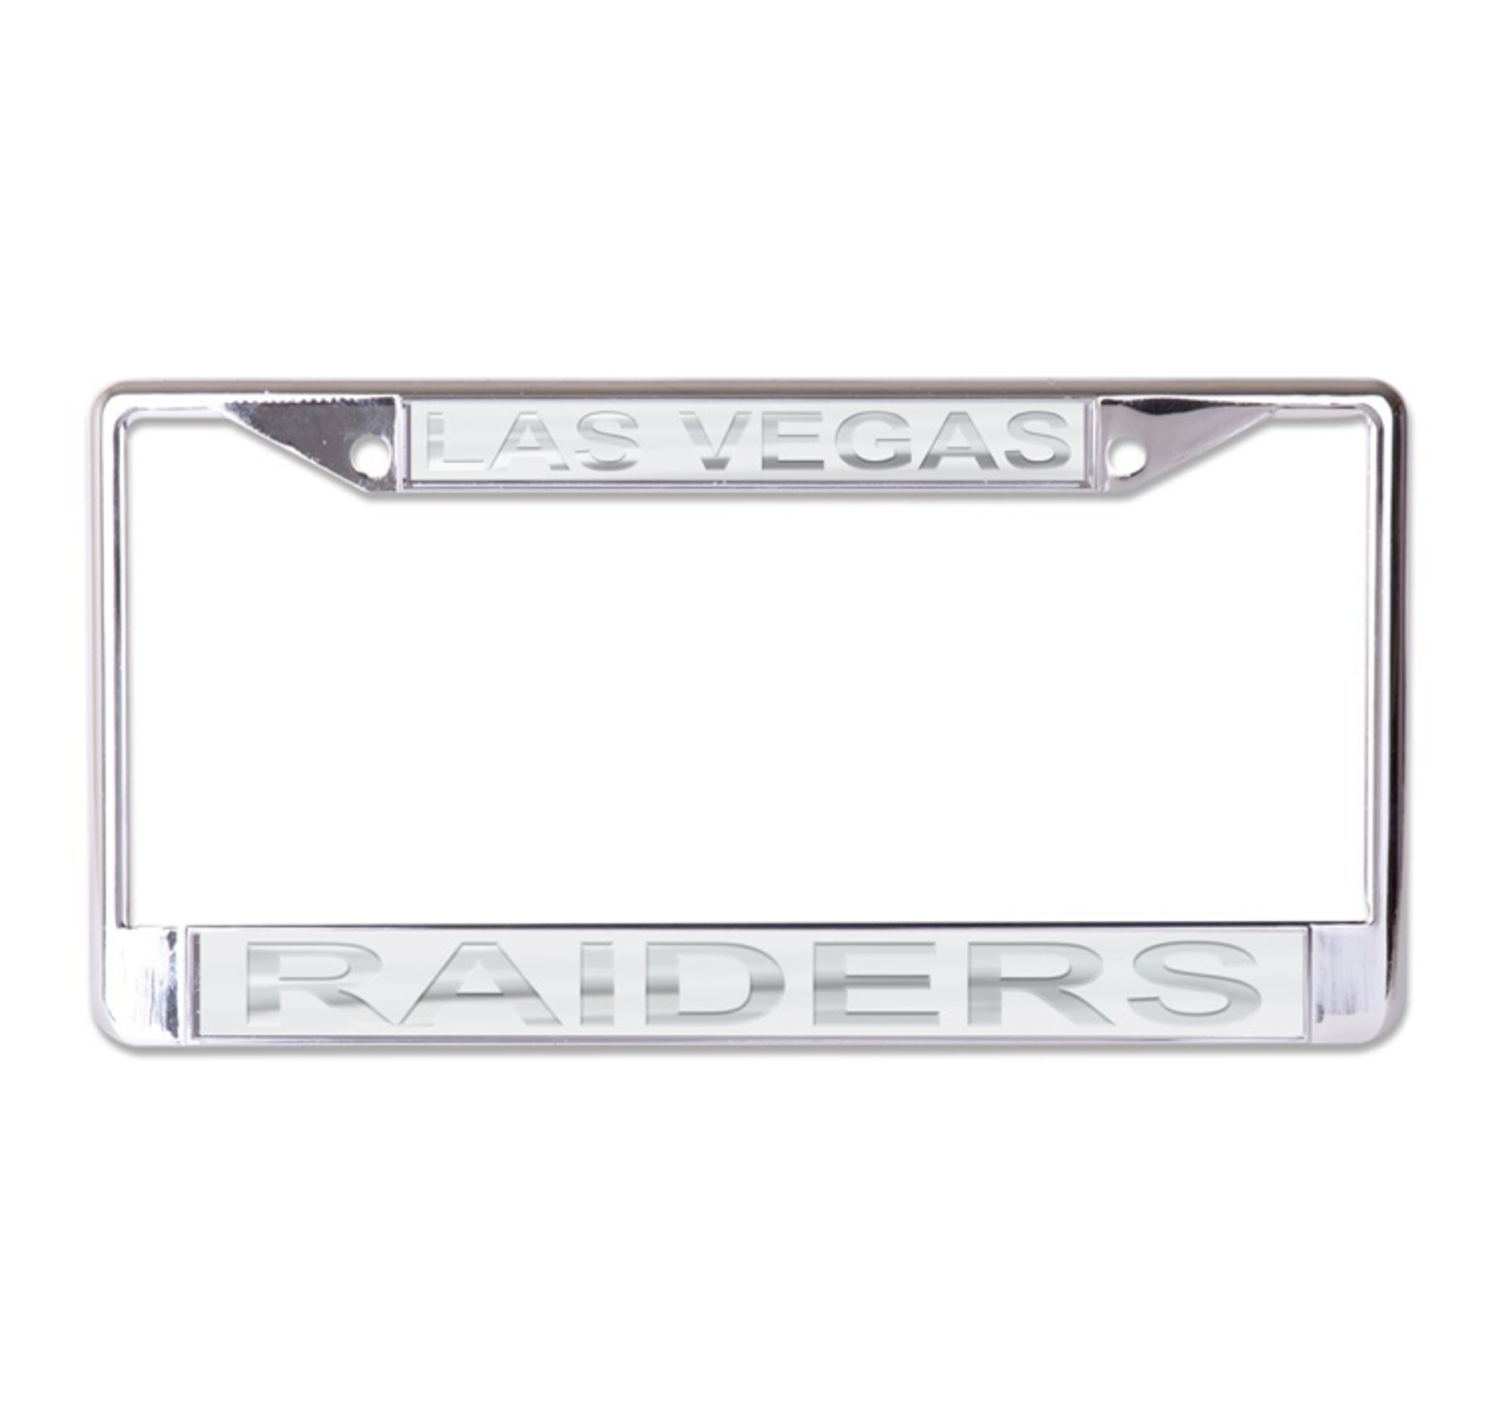 Las Vegas Raiders Black License Plate Frame